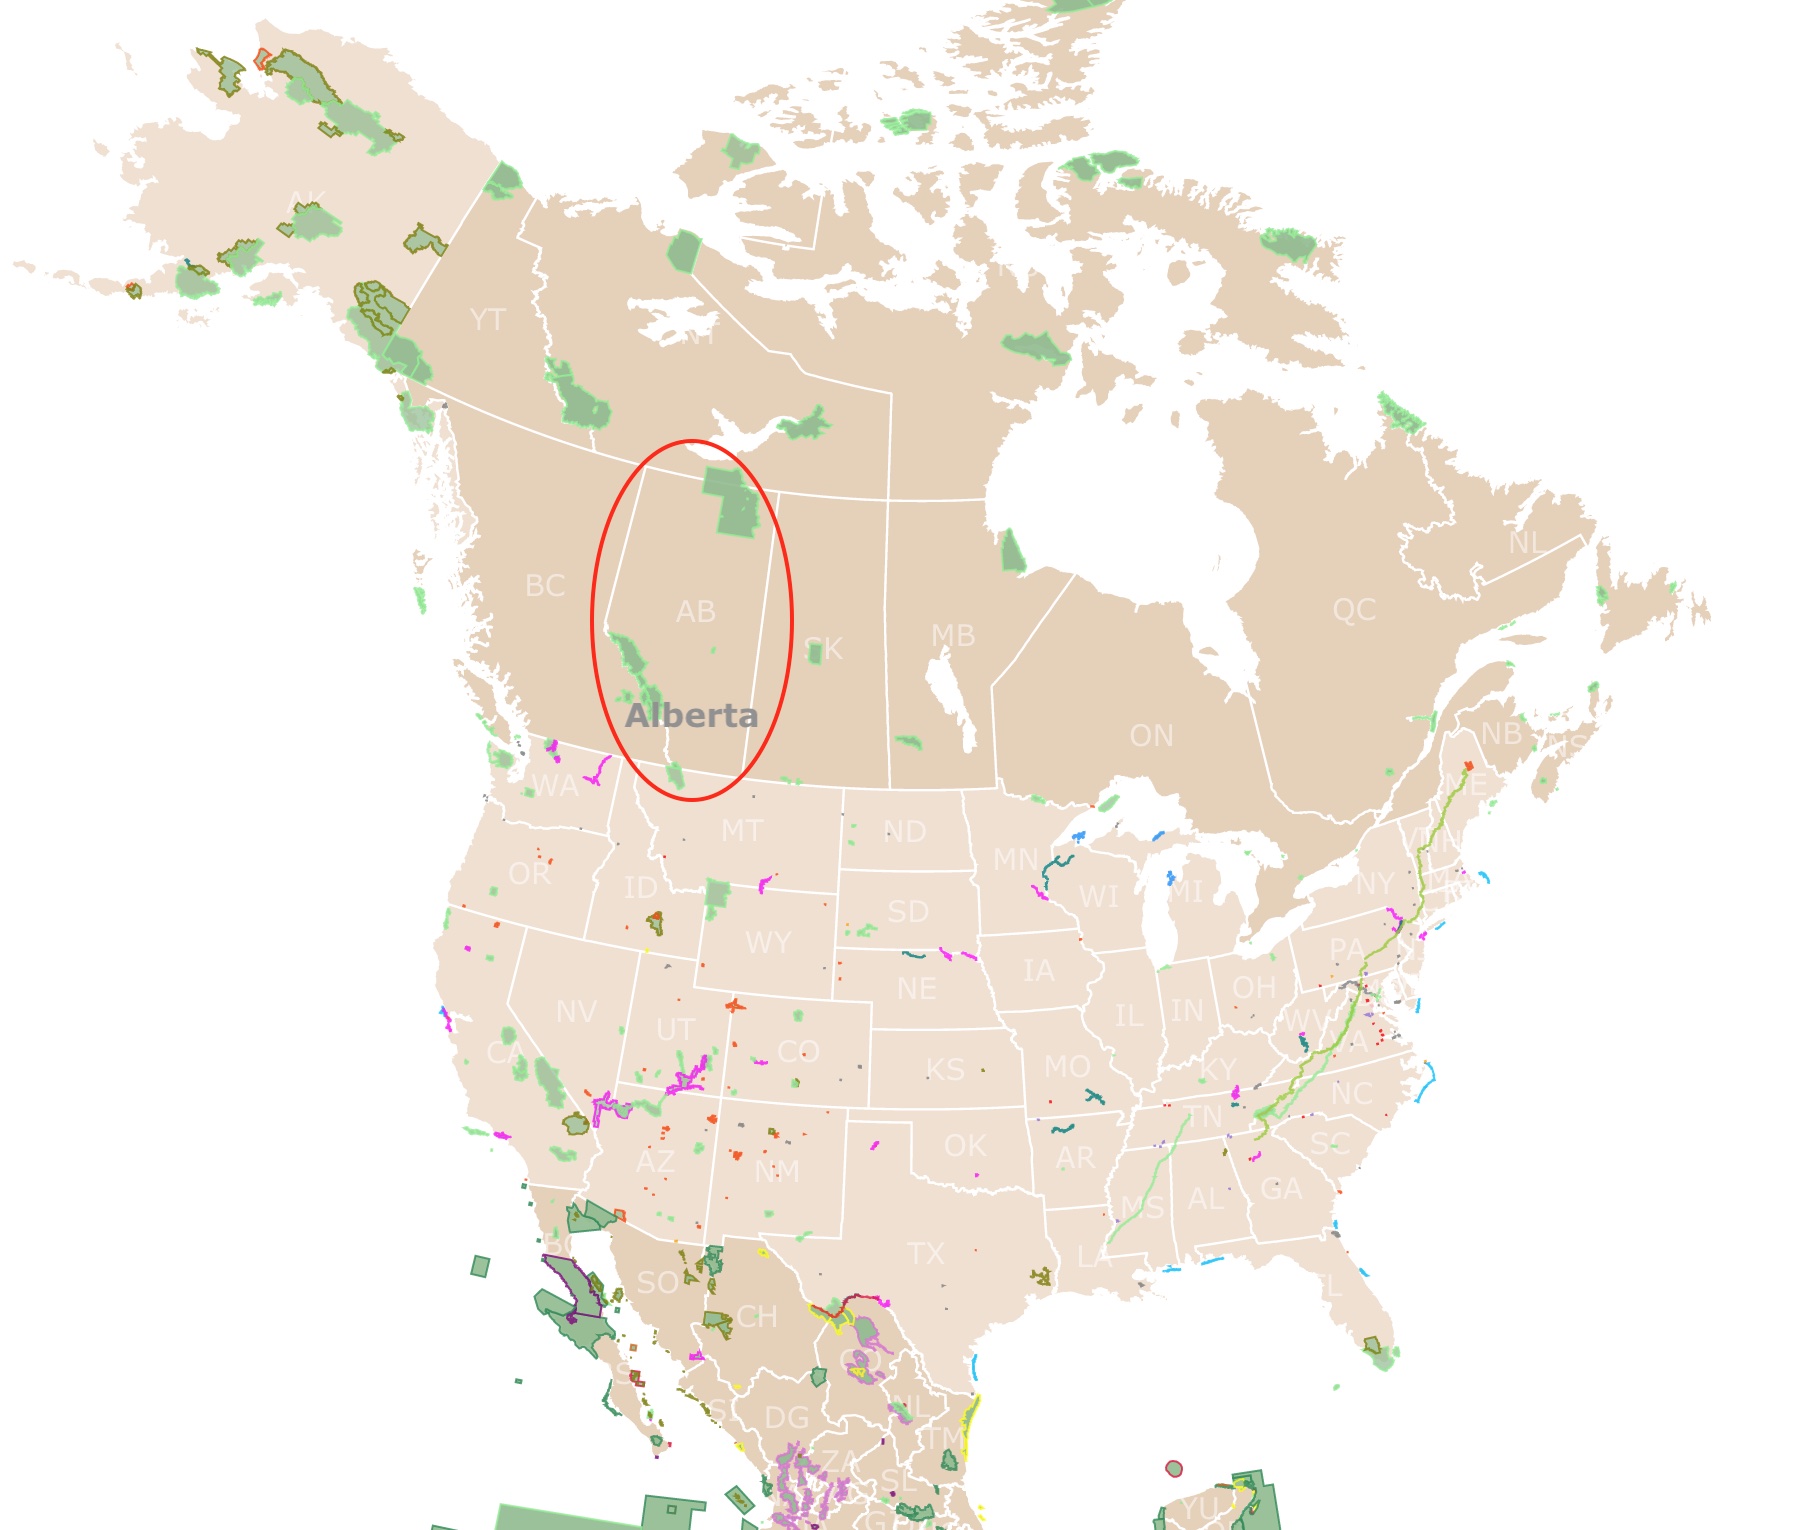 Alberta, Canada on a map of North America